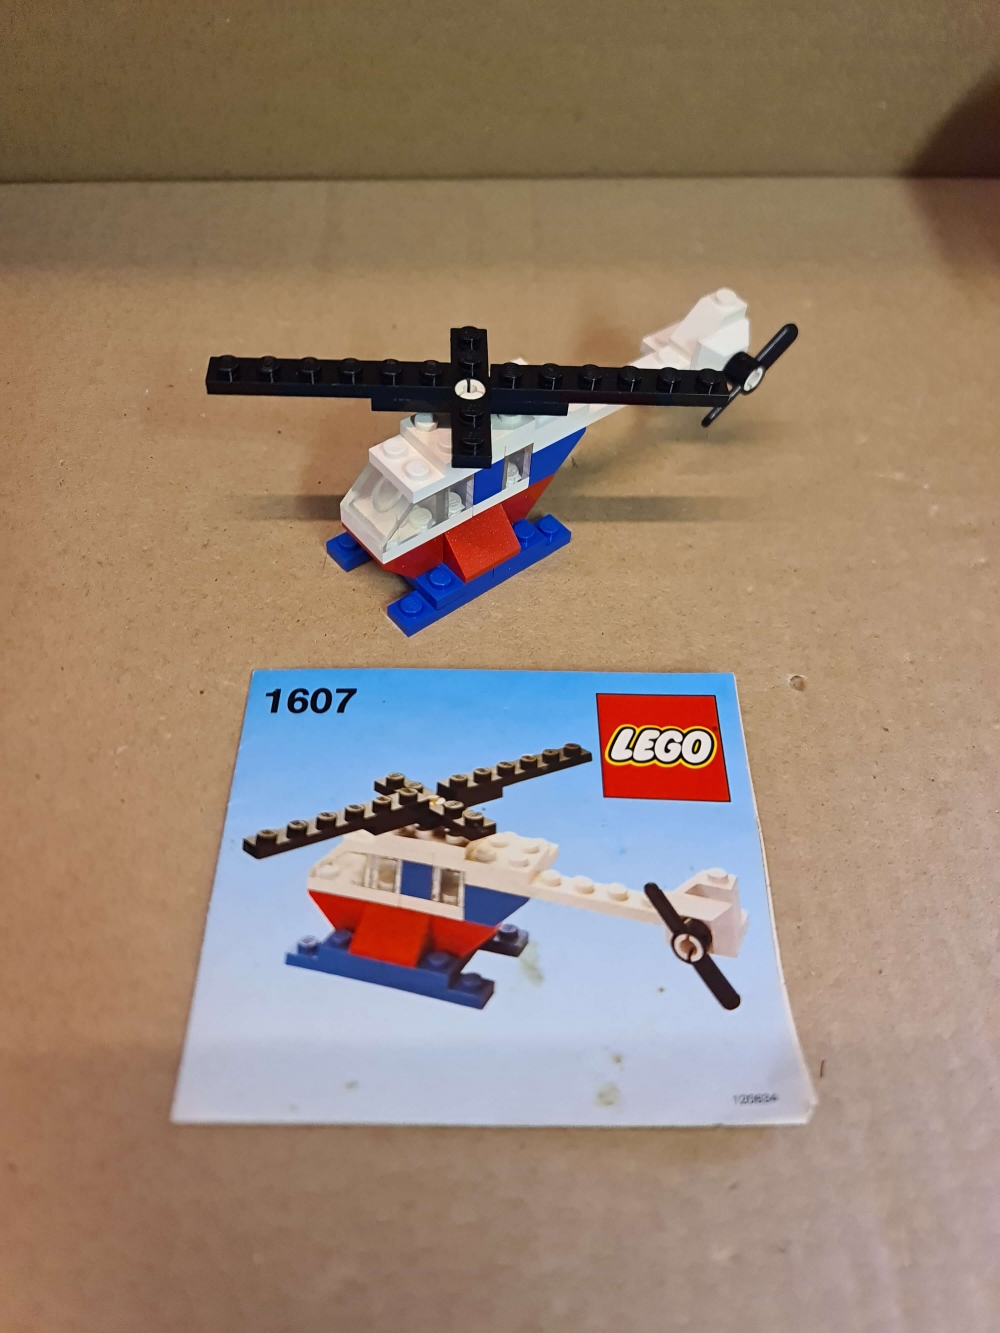 Sett 1607 fra Lego Universal Building Set serien.
Meget pent.
Komplet med manual.